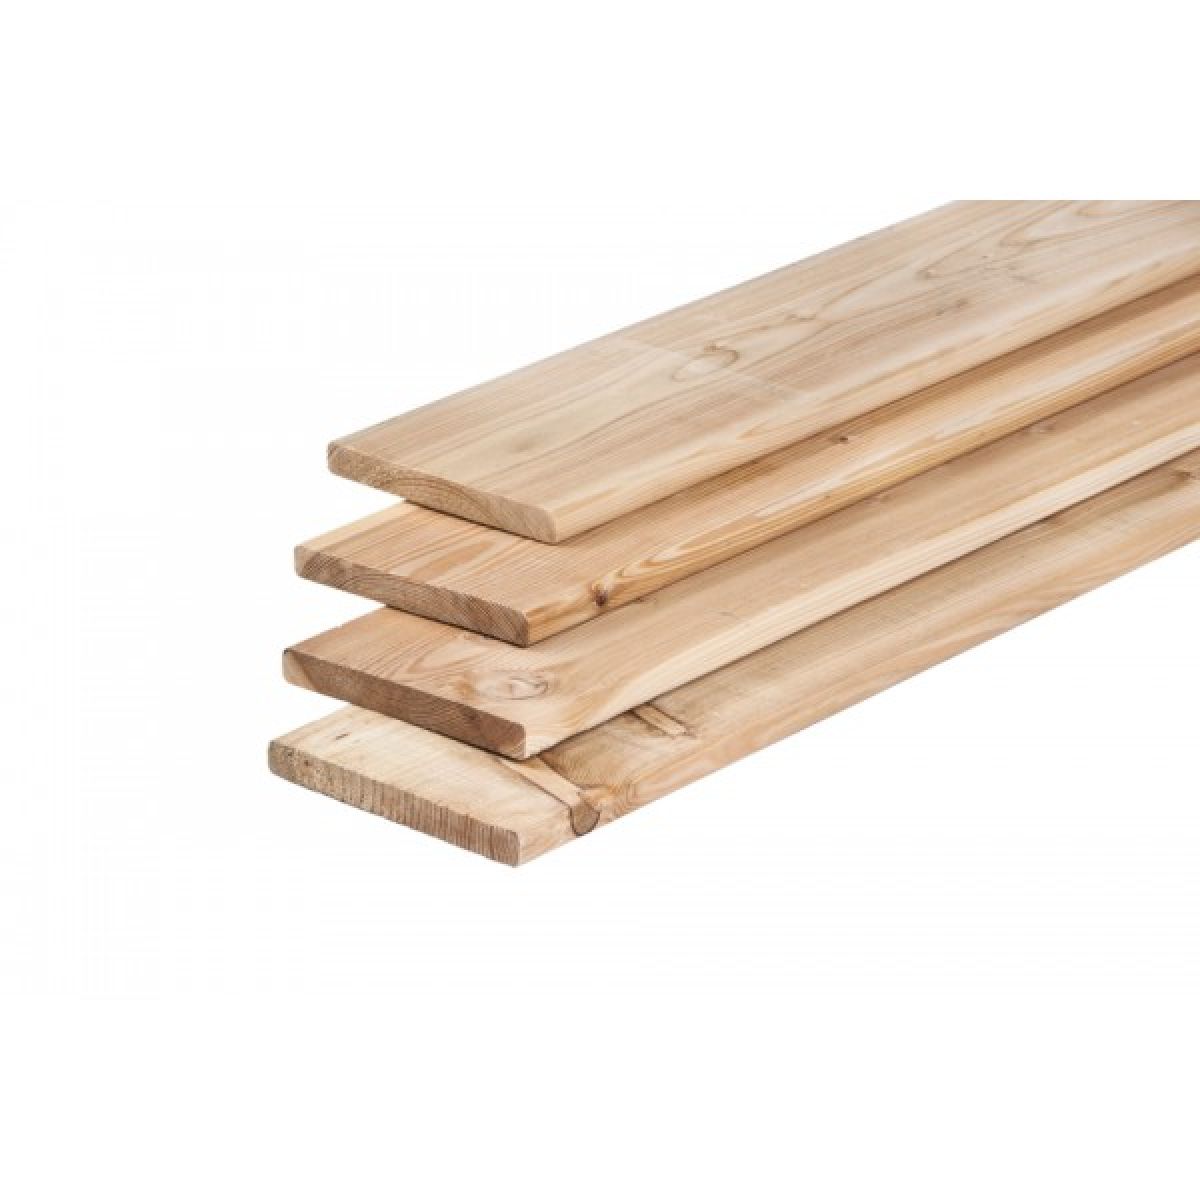 Laatste stuks!! Lariks/Douglas plank onbehandeld 1,6x14x180 cm